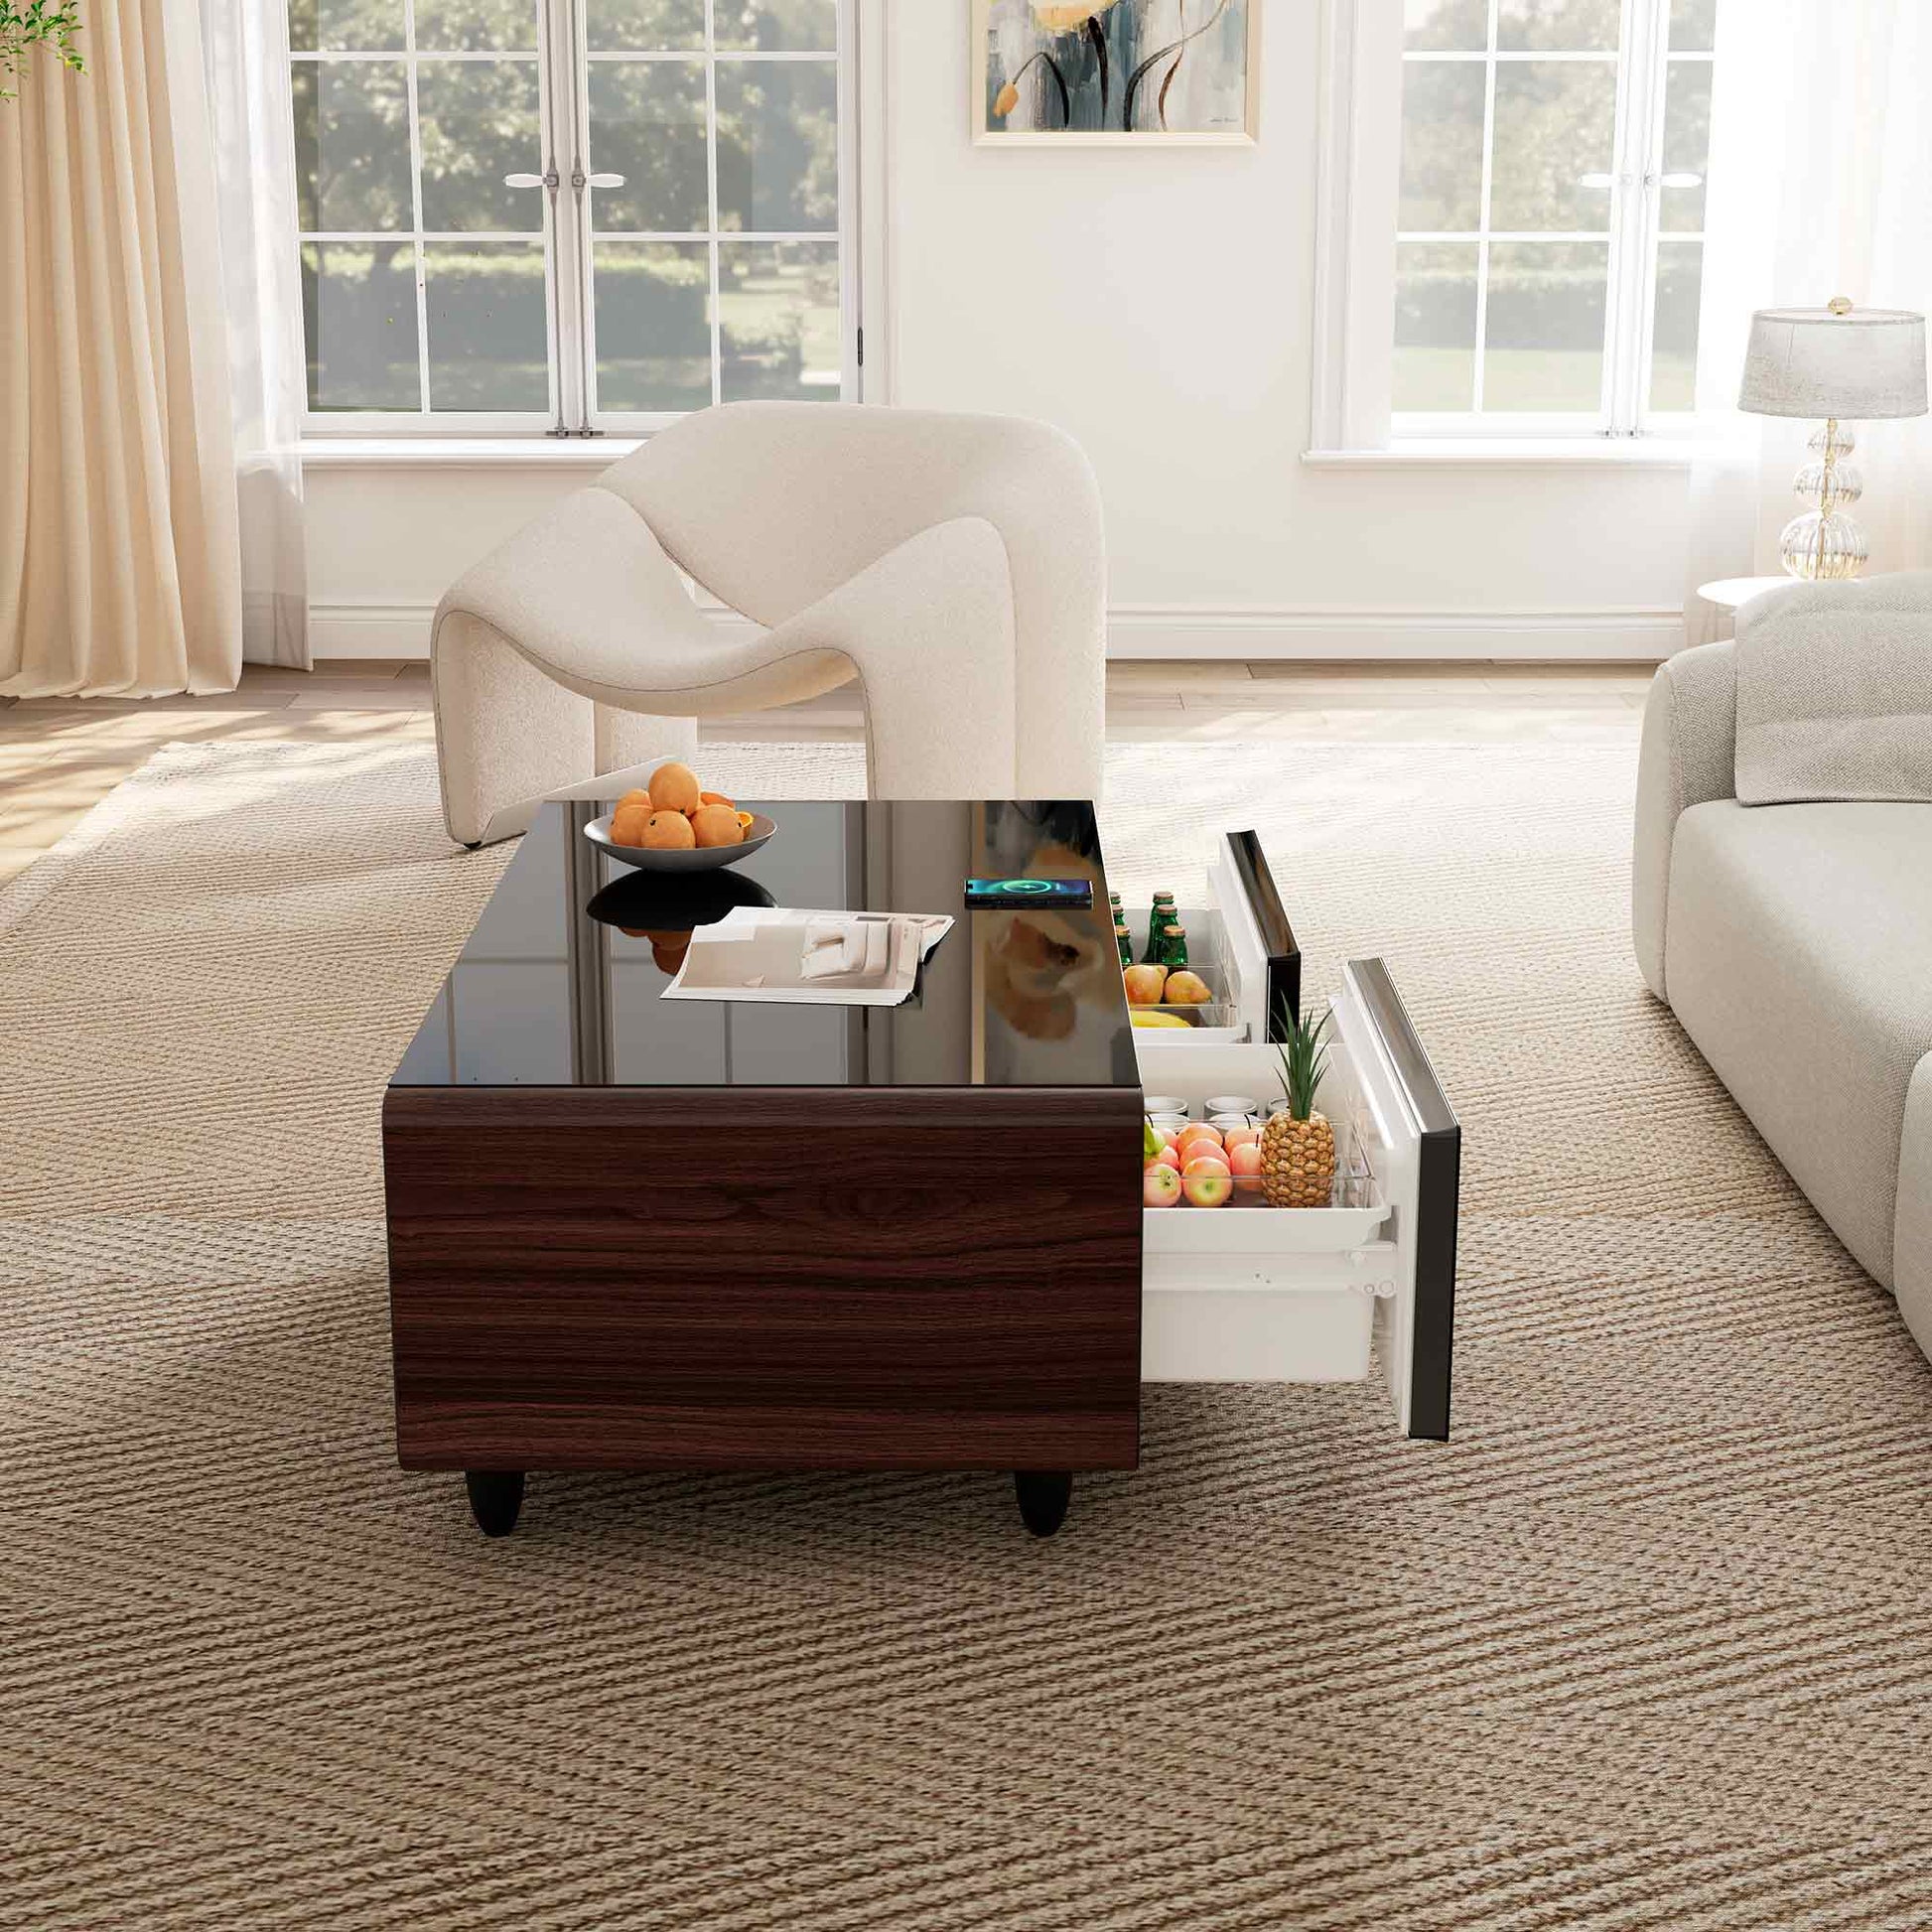 50 inch Walnut Woodgrain Style Smart Fridge Coffee Table with Bluetooth Speakers, lifestyle in minimalist Livingroom